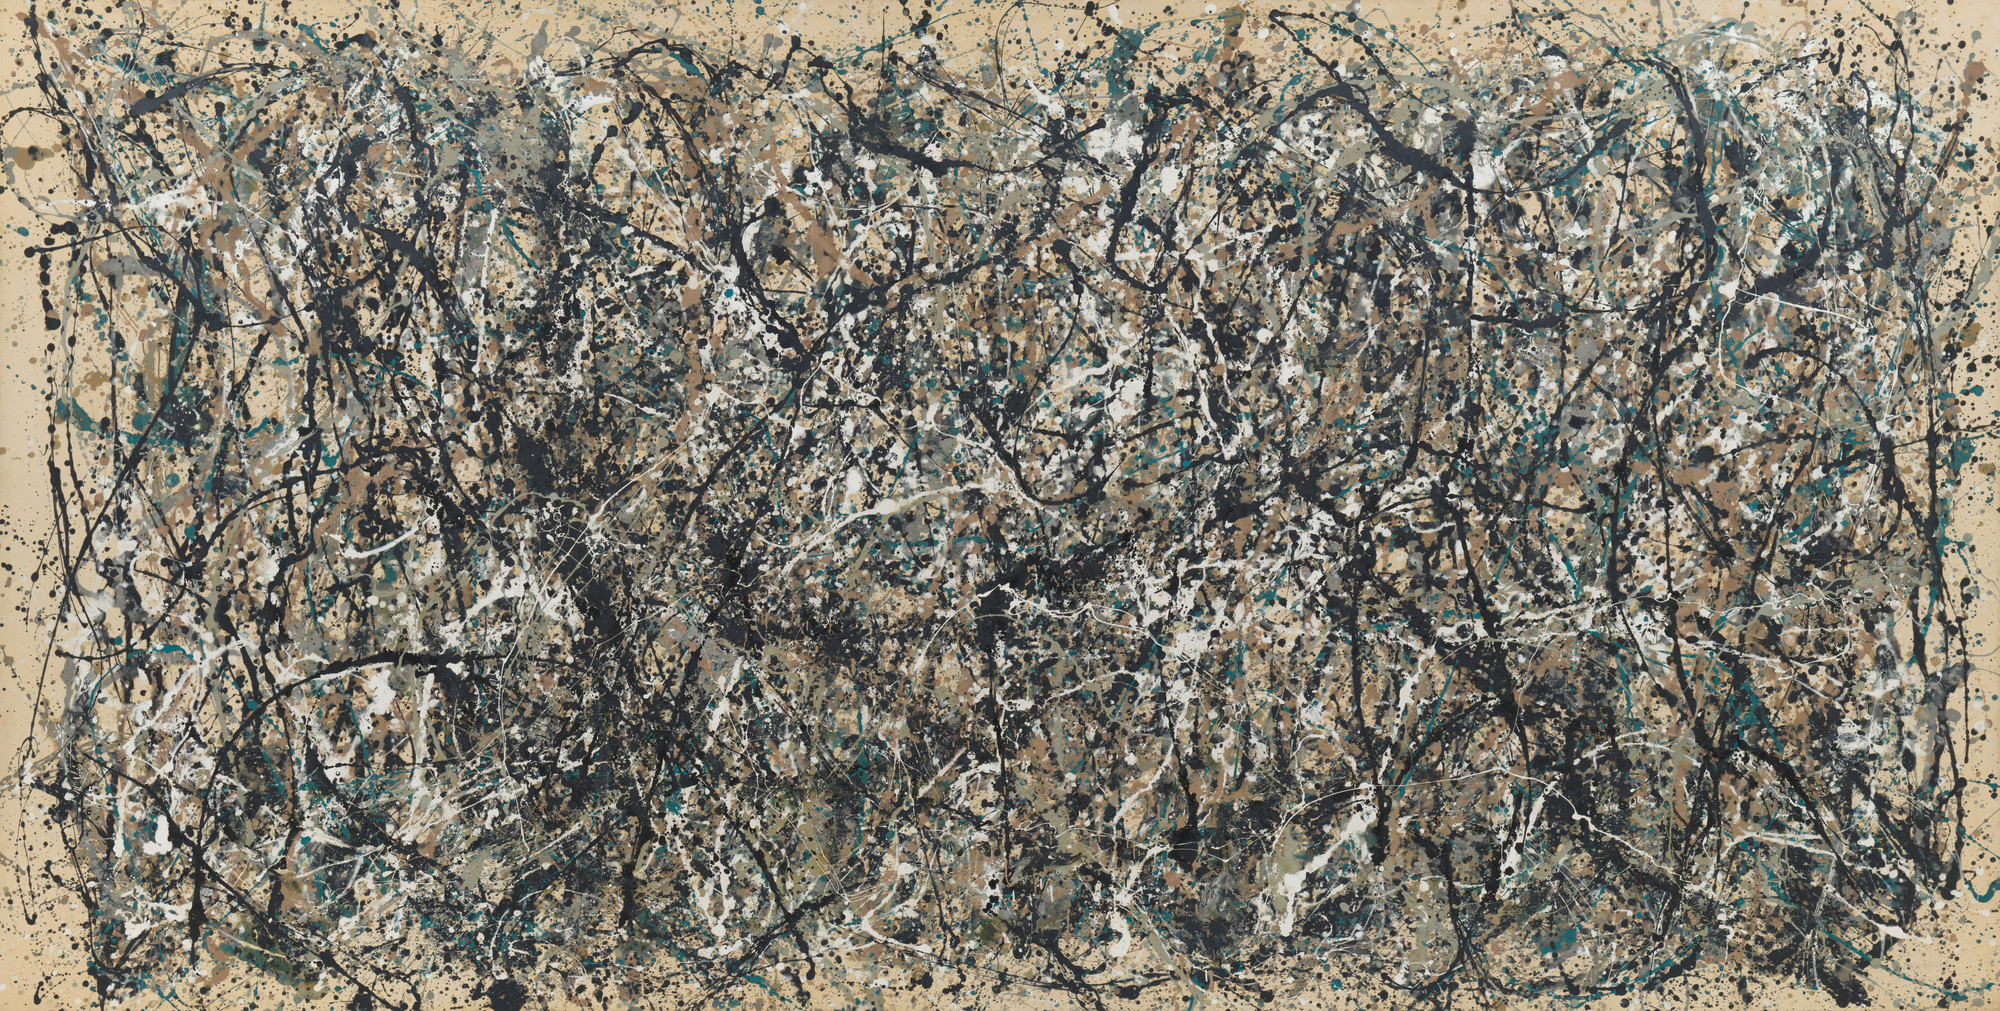 Jackson Pollock's Drawings - Artforum International